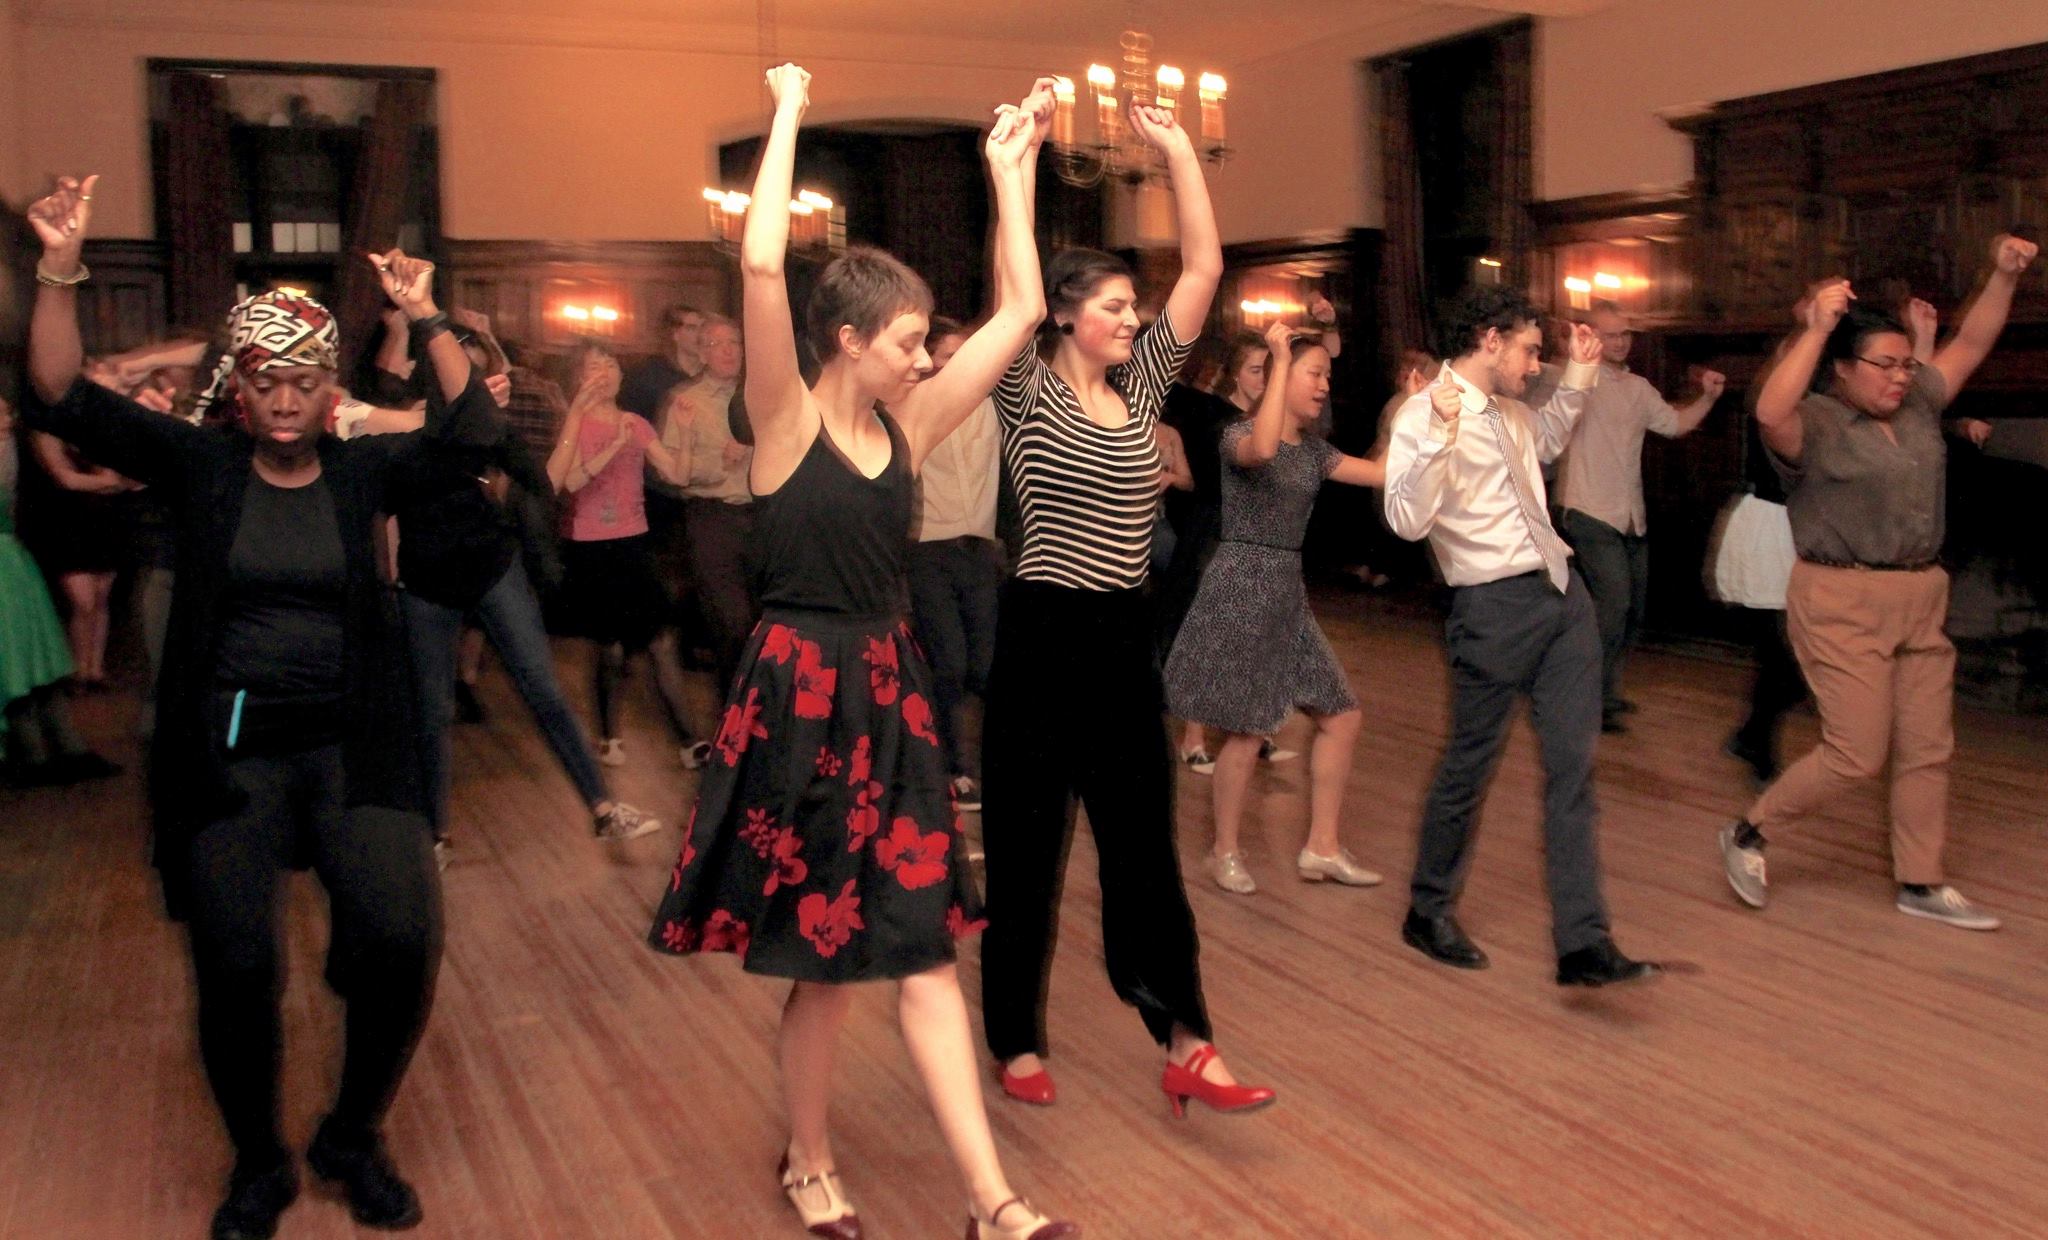 Chicago Swing Dance Society